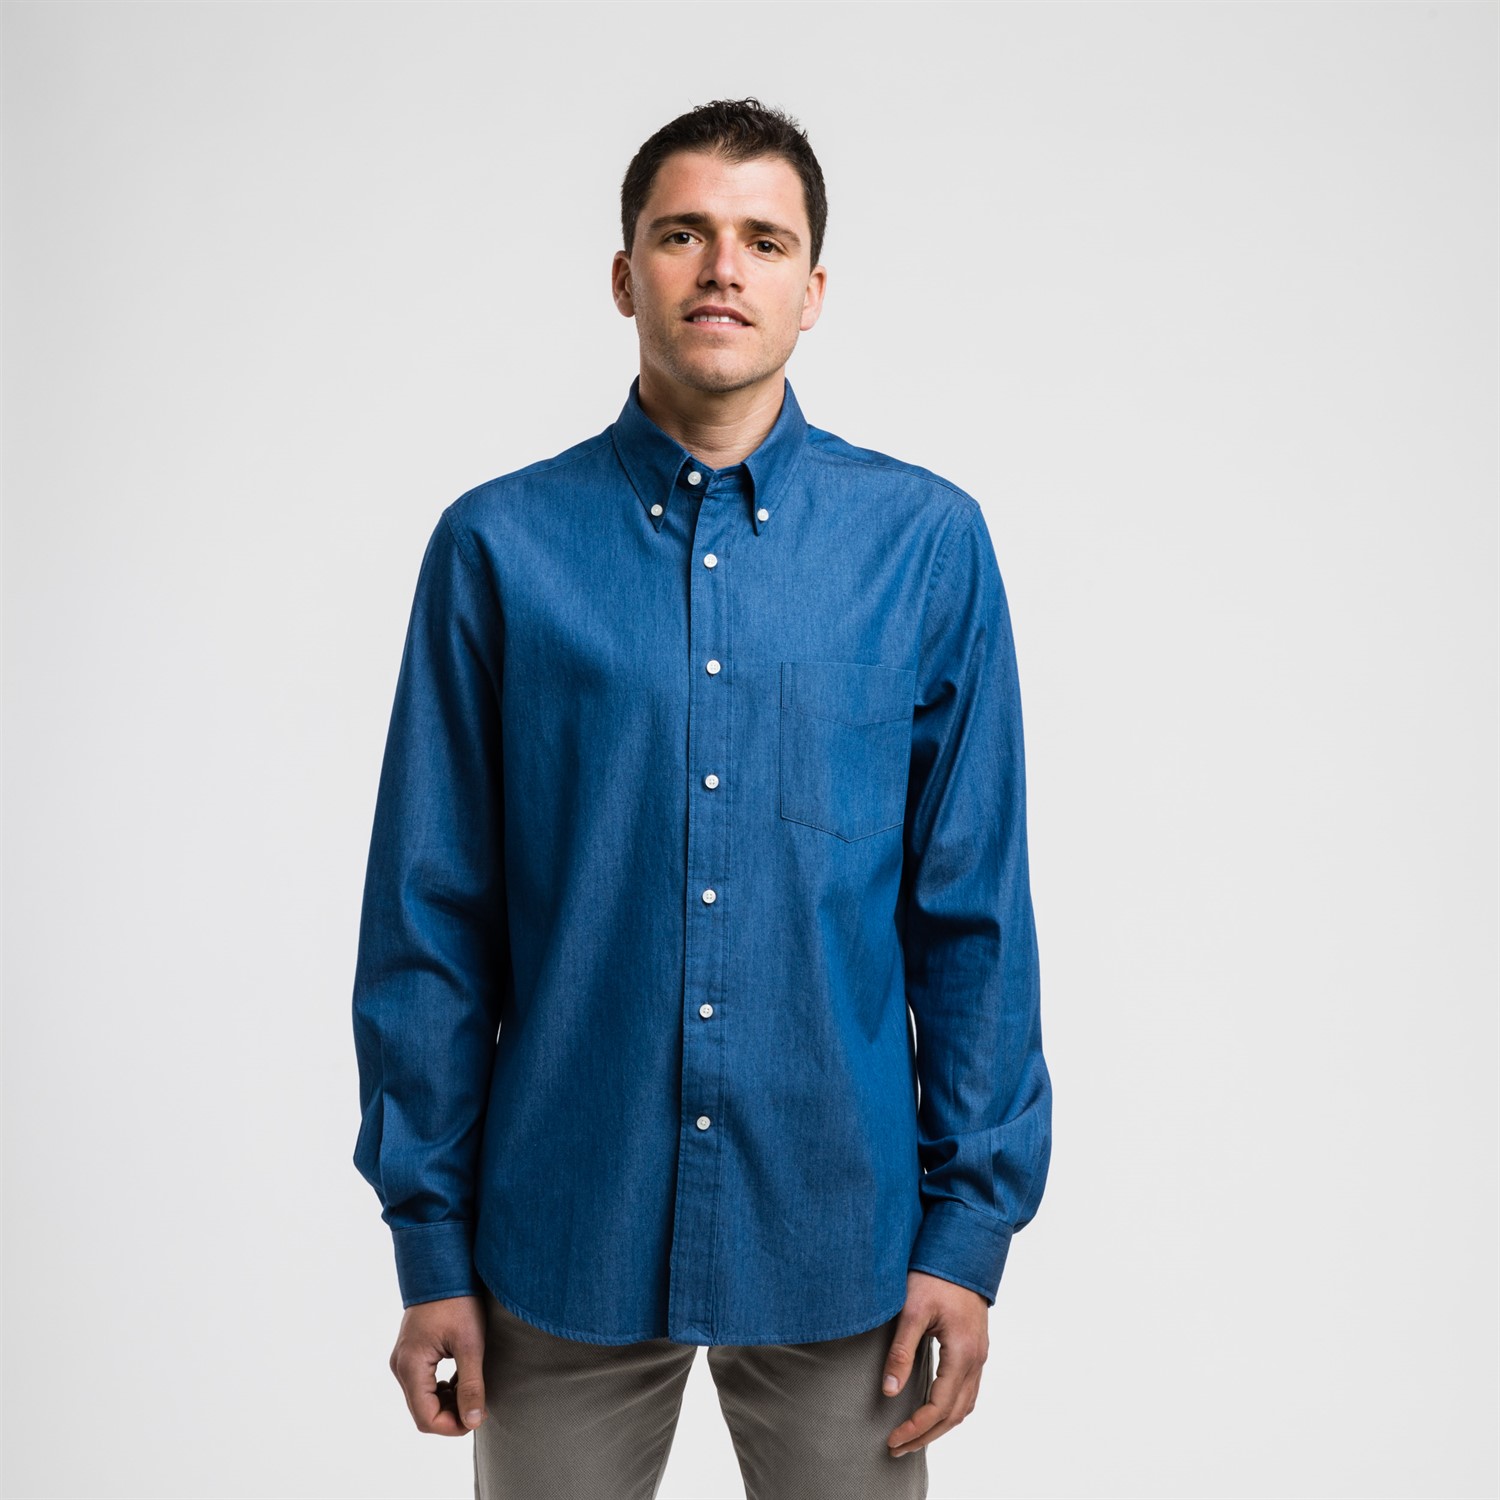 Denim bottom down shirt | Shirts | Clothing Man | Vertical Fashion